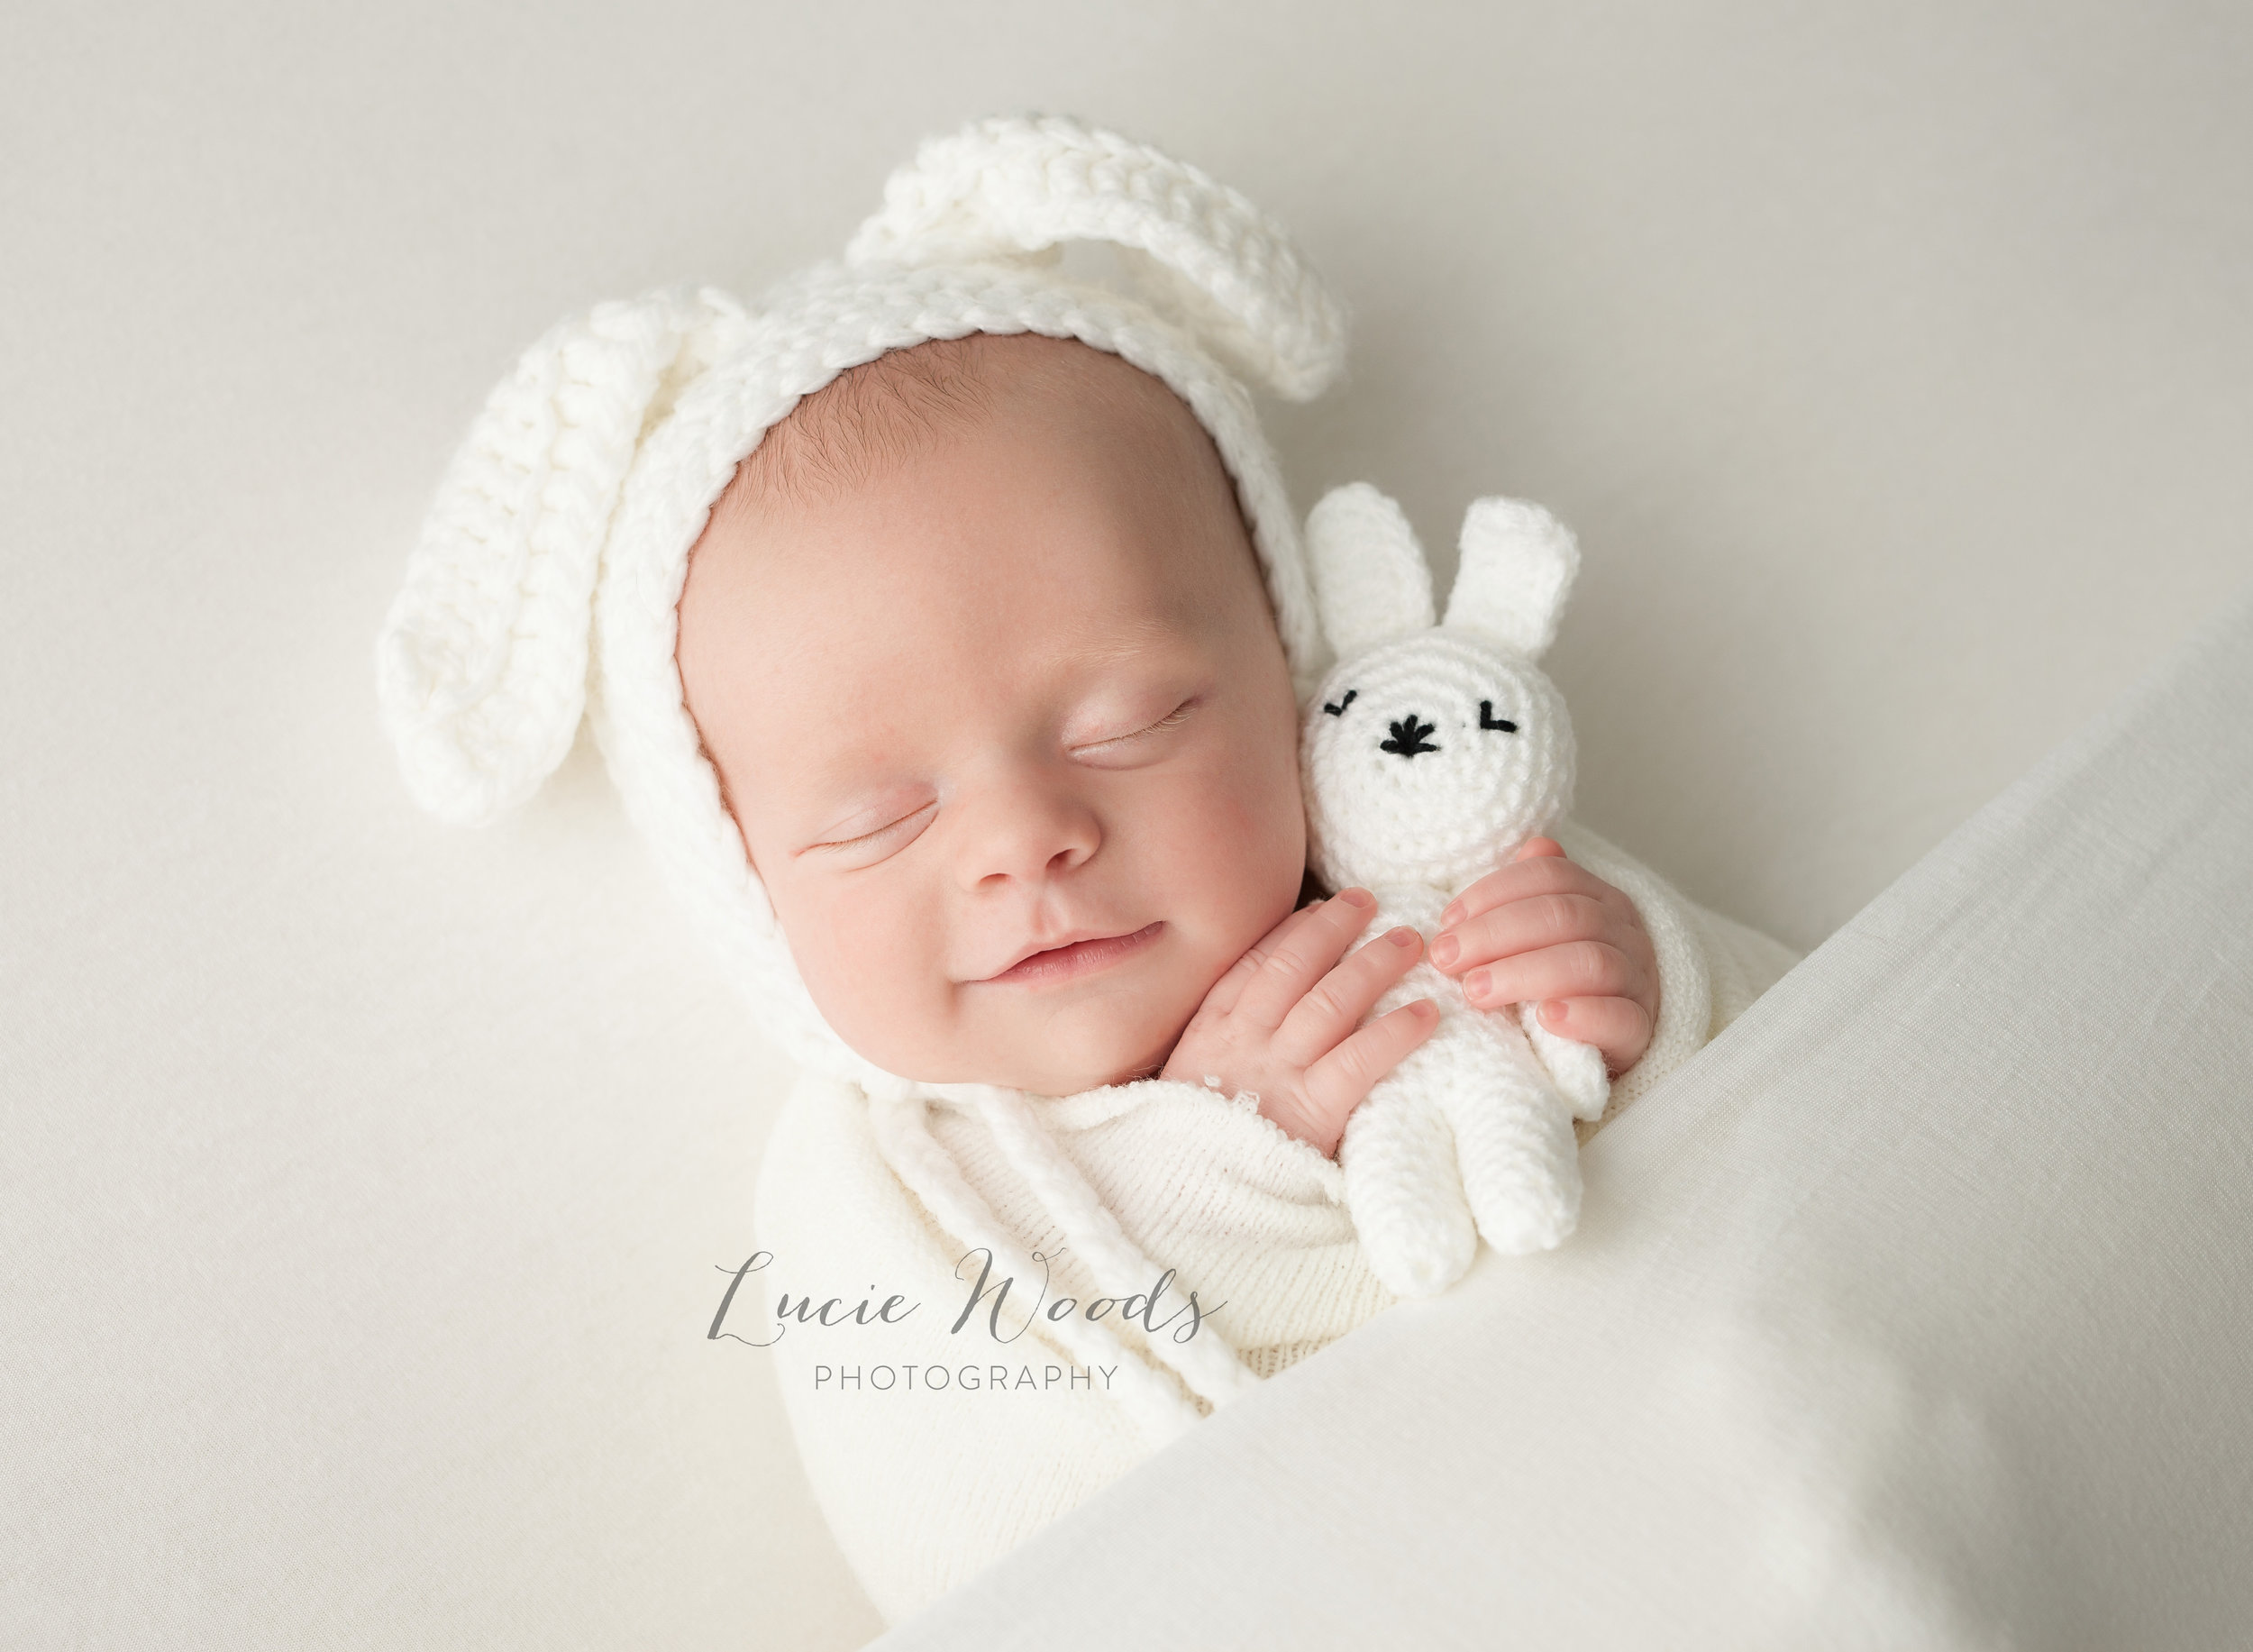 Newborn photographer baby photography Manchester Lancashire Rawtenstall Lucie Woods Photography Altrincham Hale Ramsbottom cute baby photos 